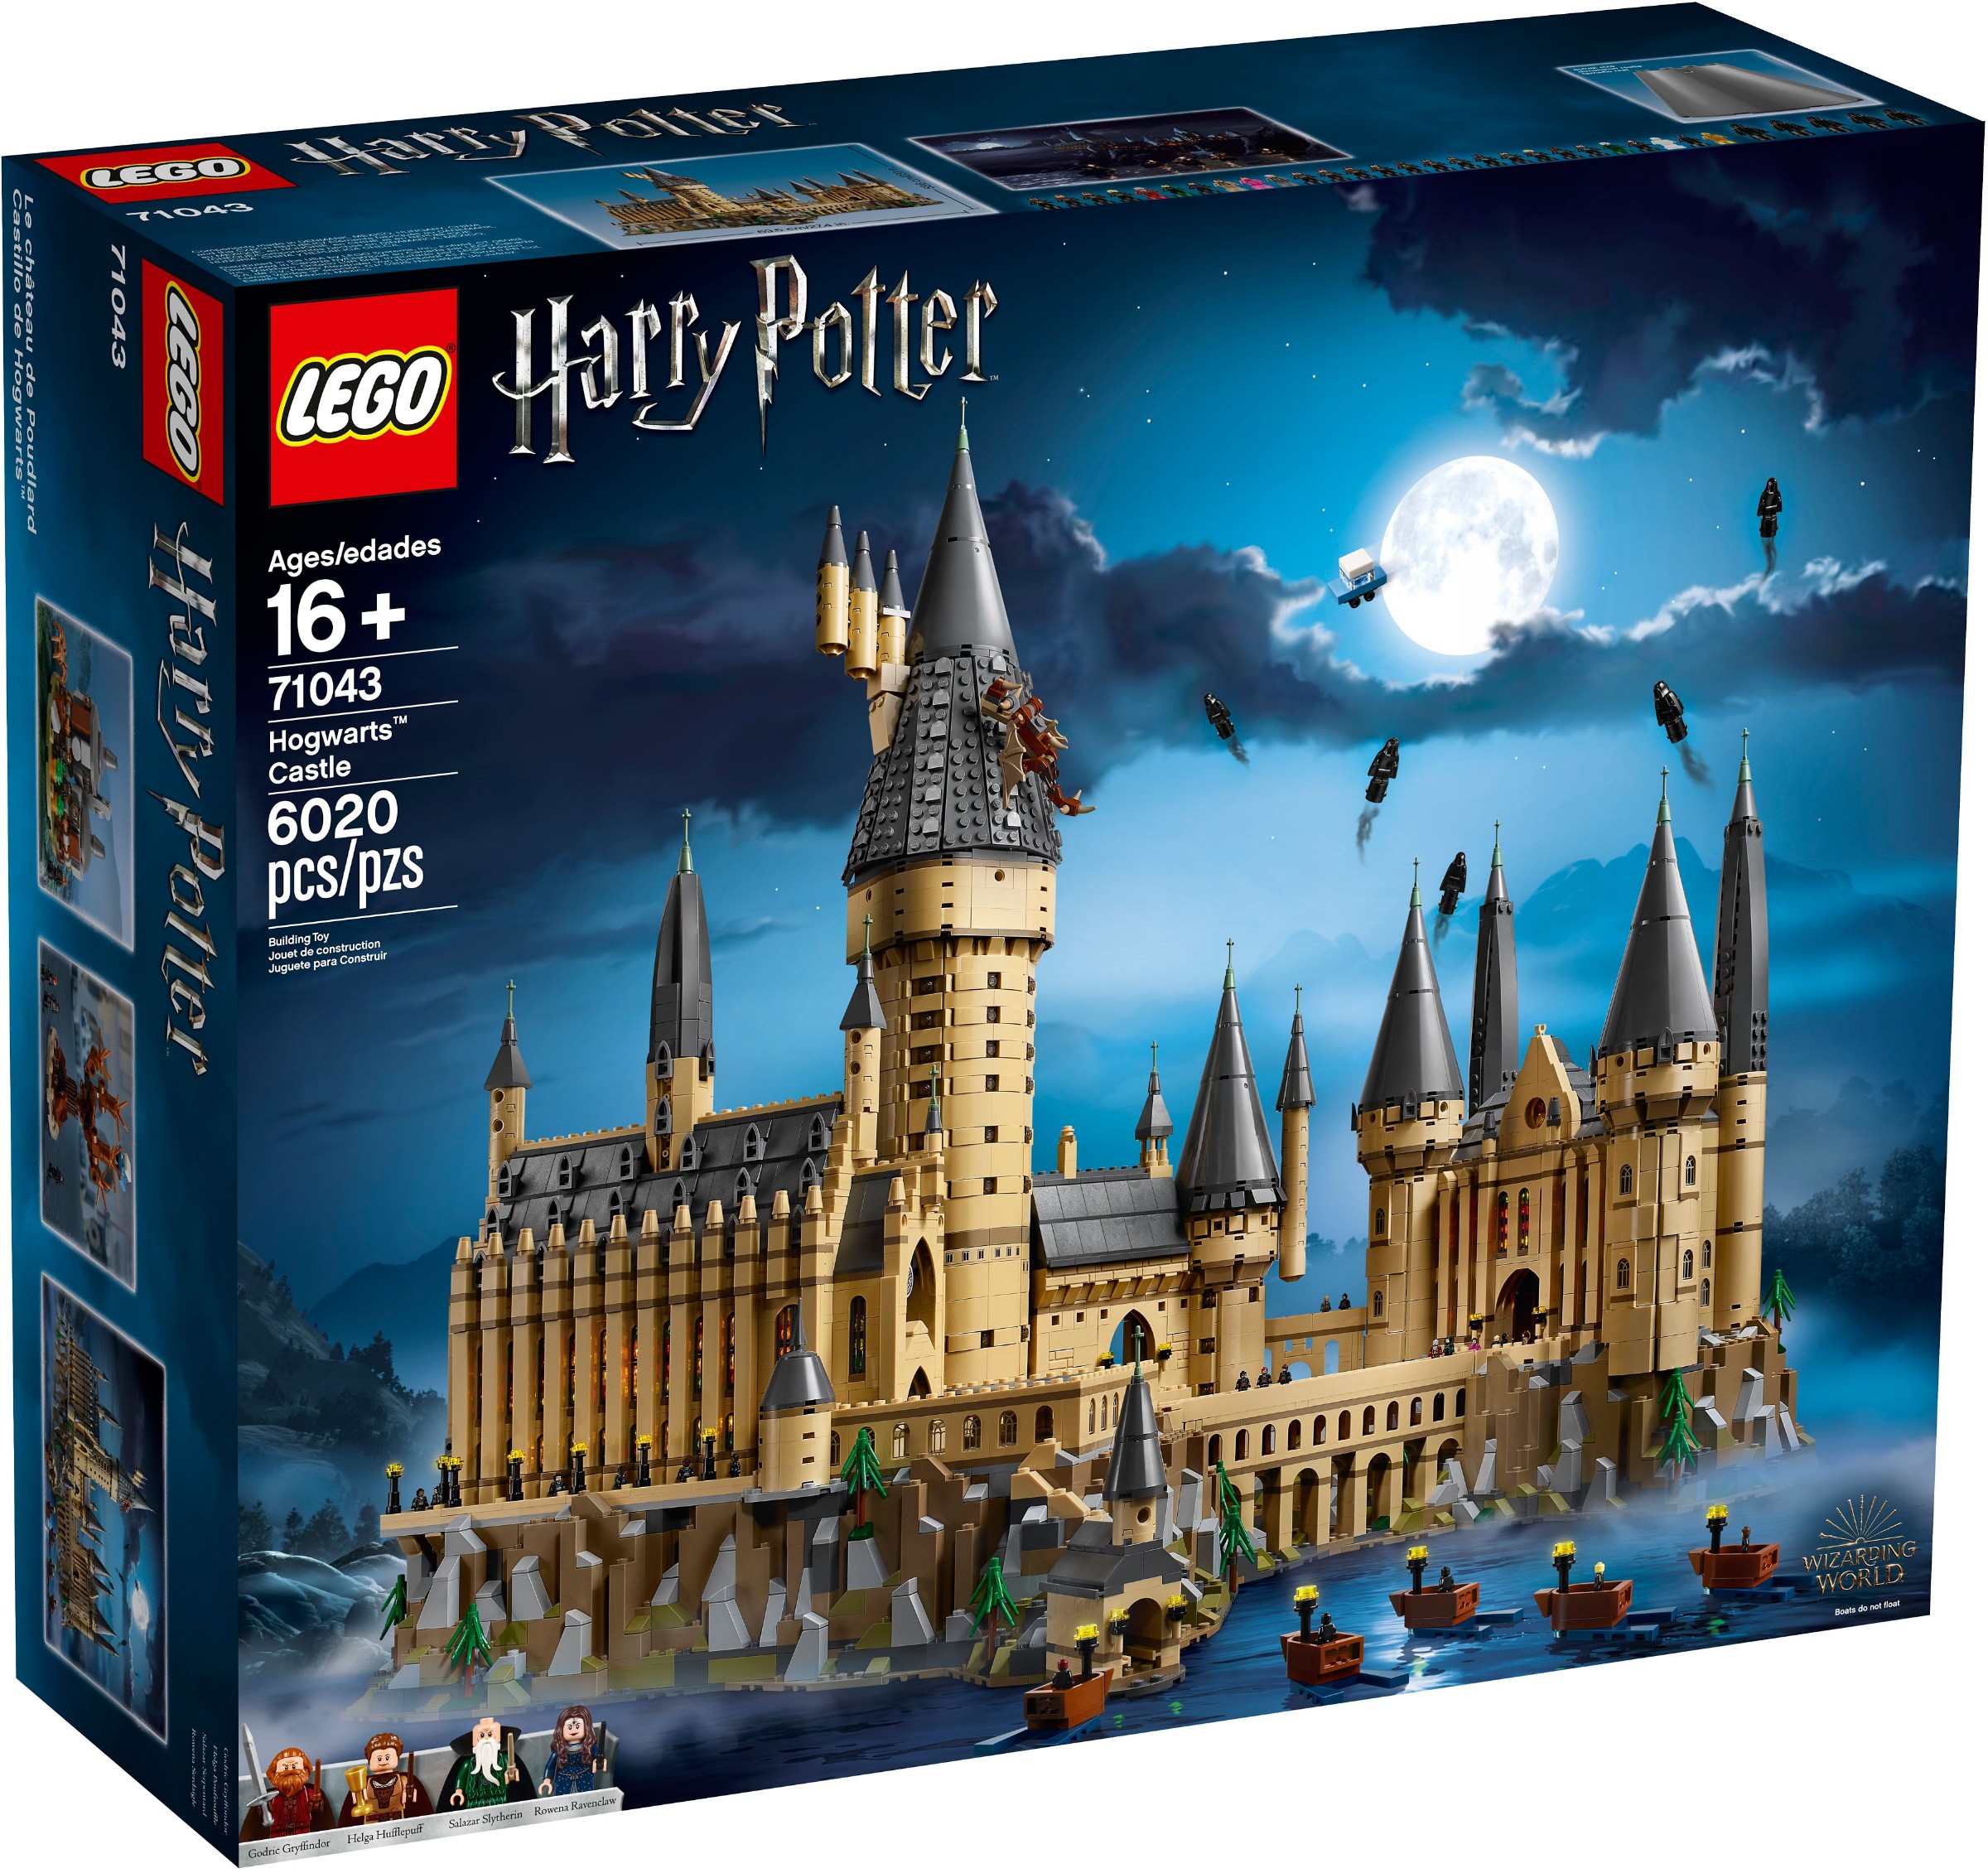 71043 Hogwarts Castle | Brickipedia 